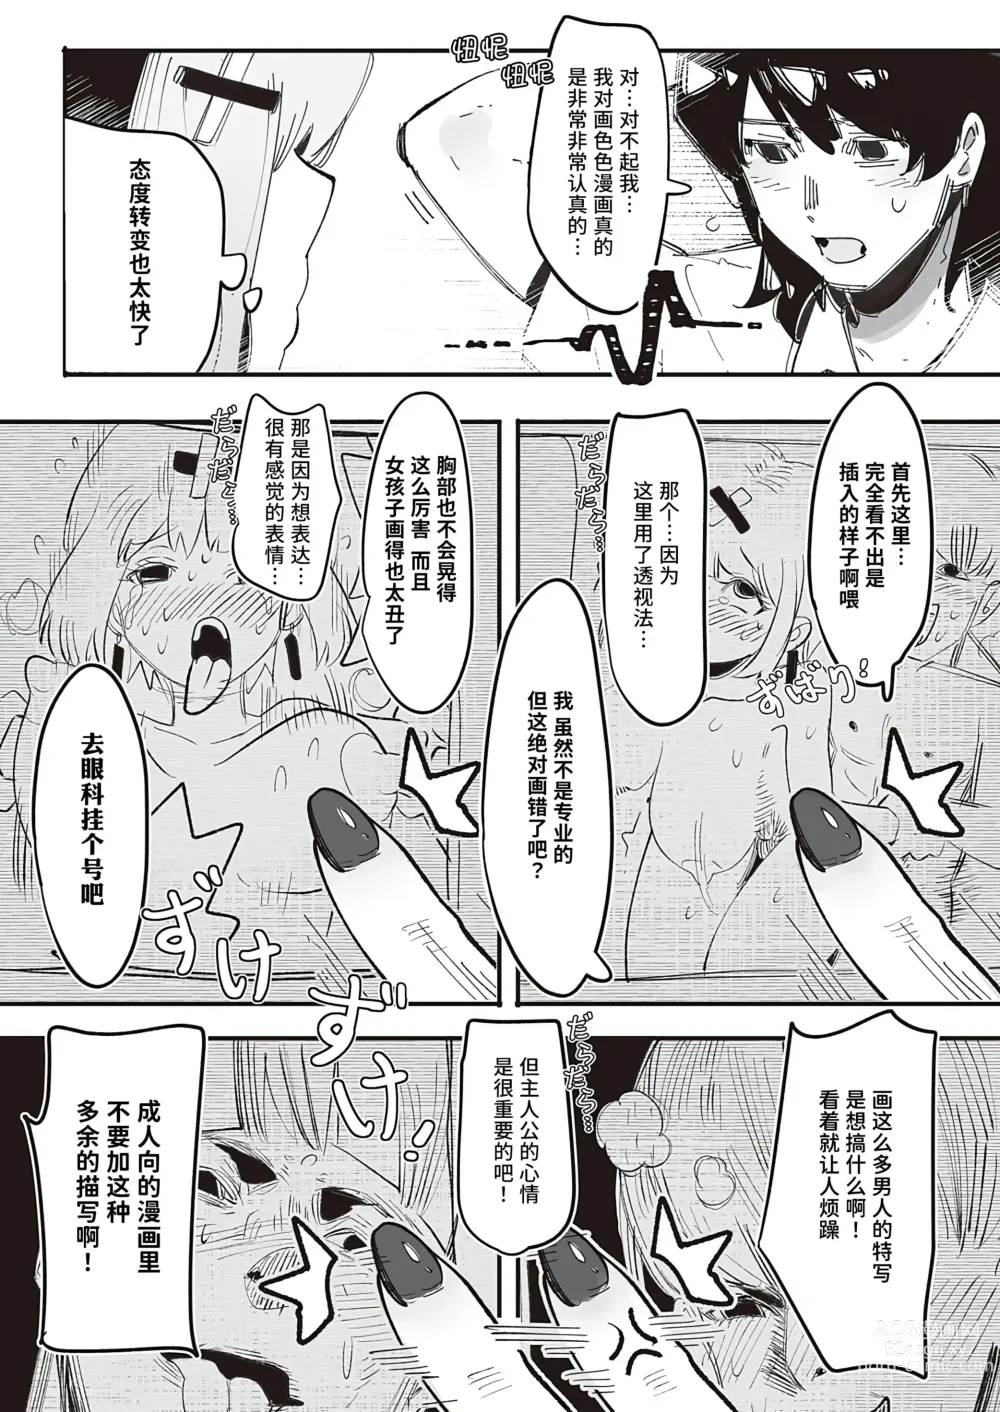 Page 4 of manga 久崎学姐的欧派素描